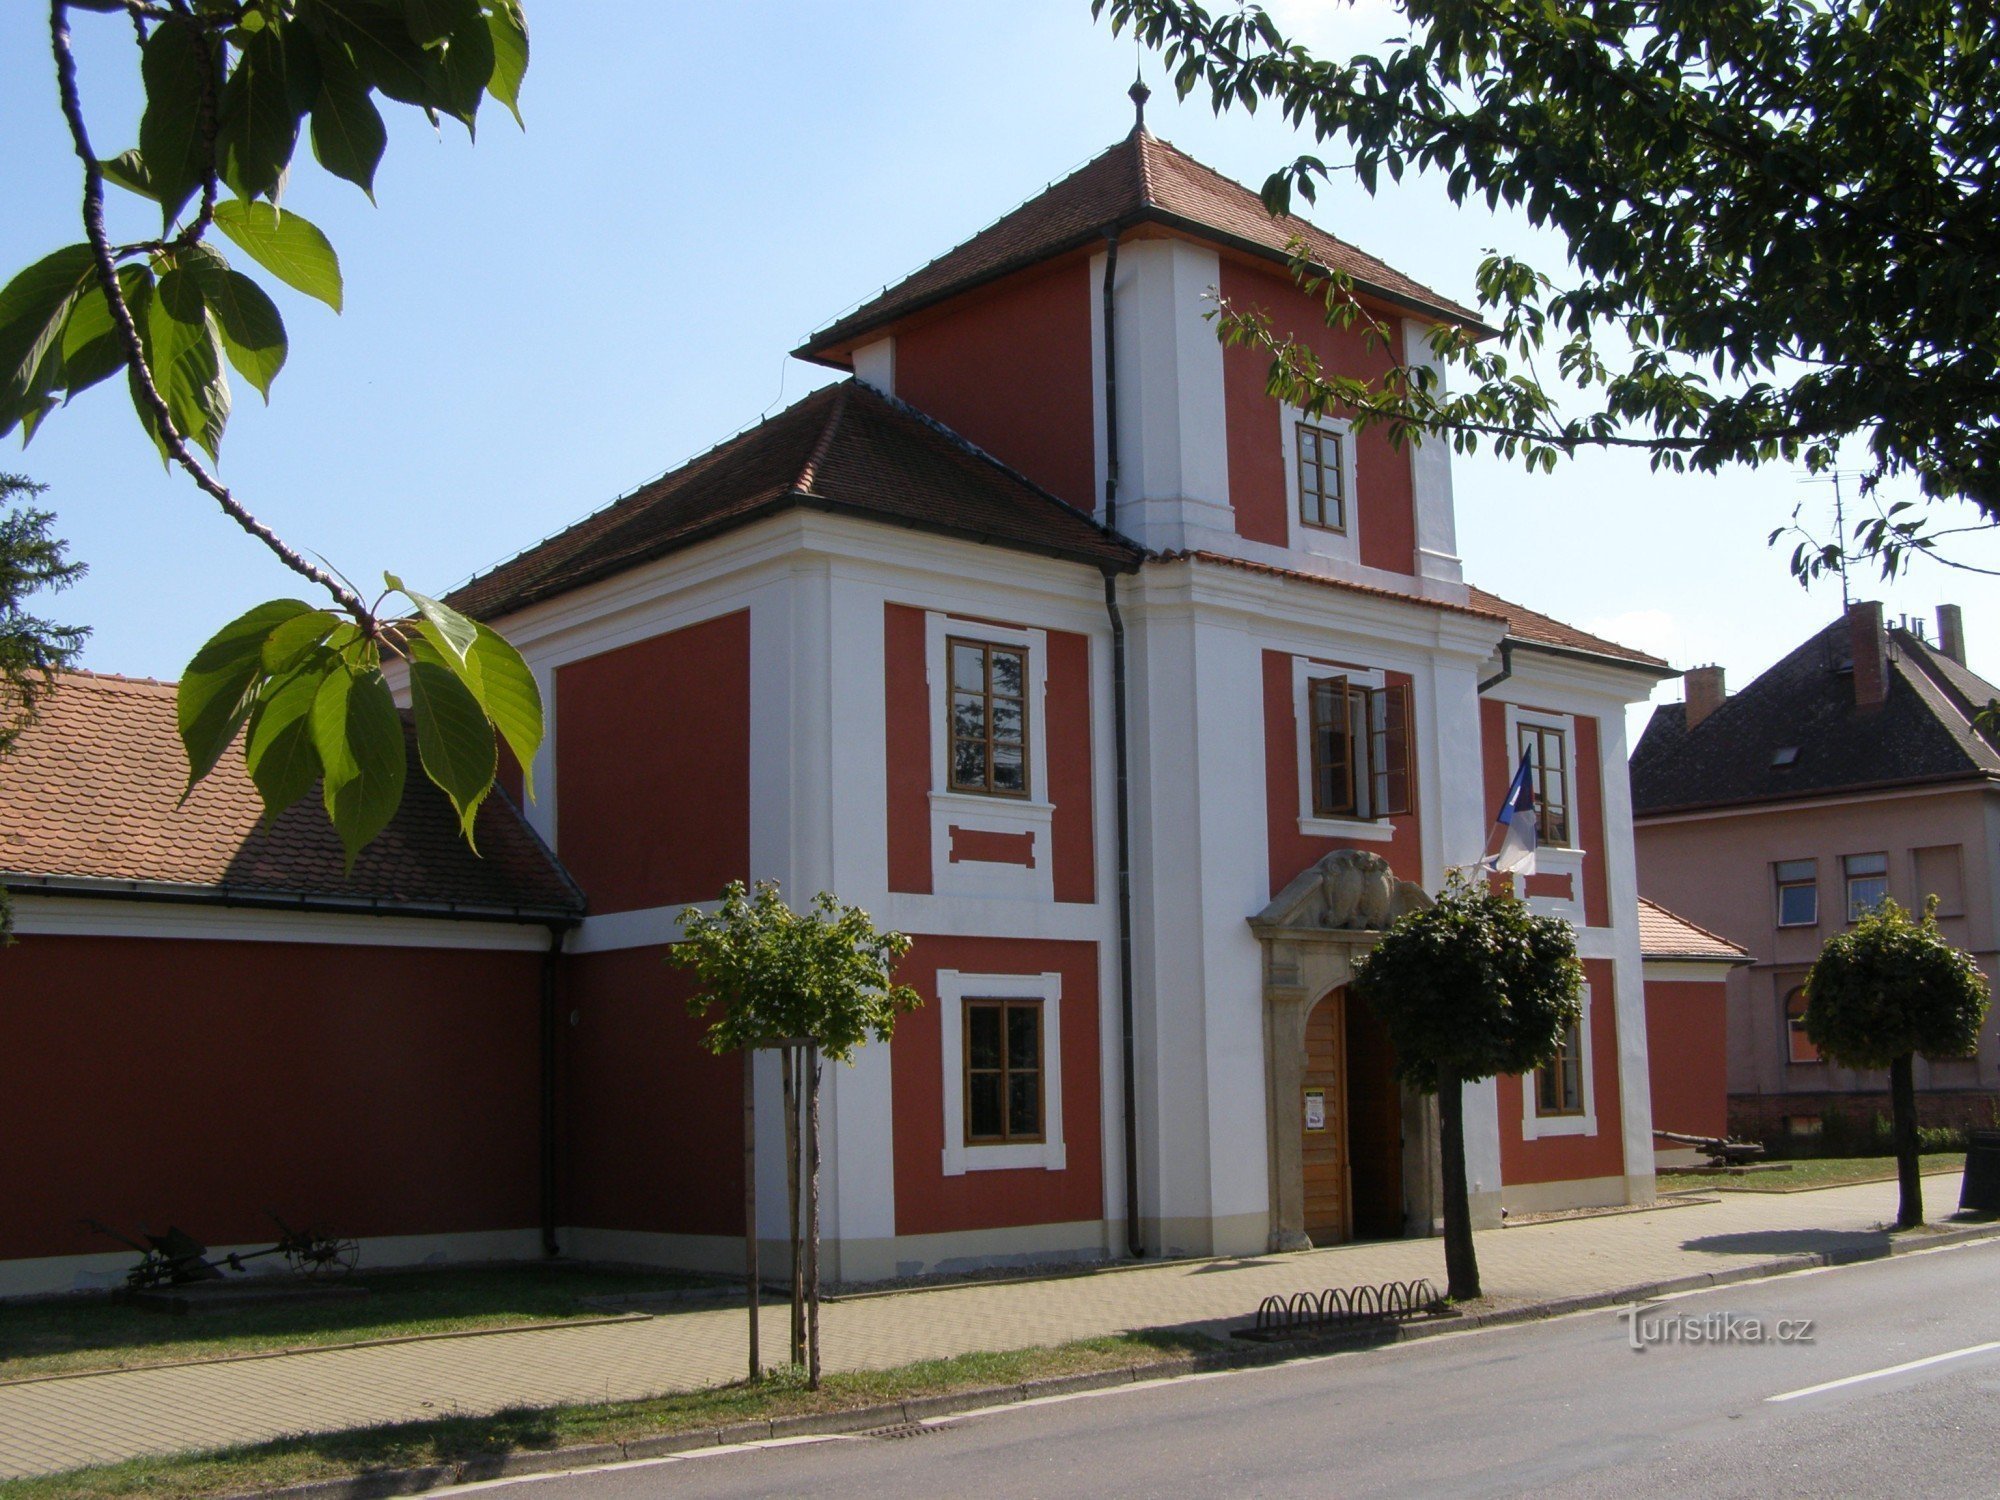 Chlumec nad Cidlinou - Loreta, városi múzeum